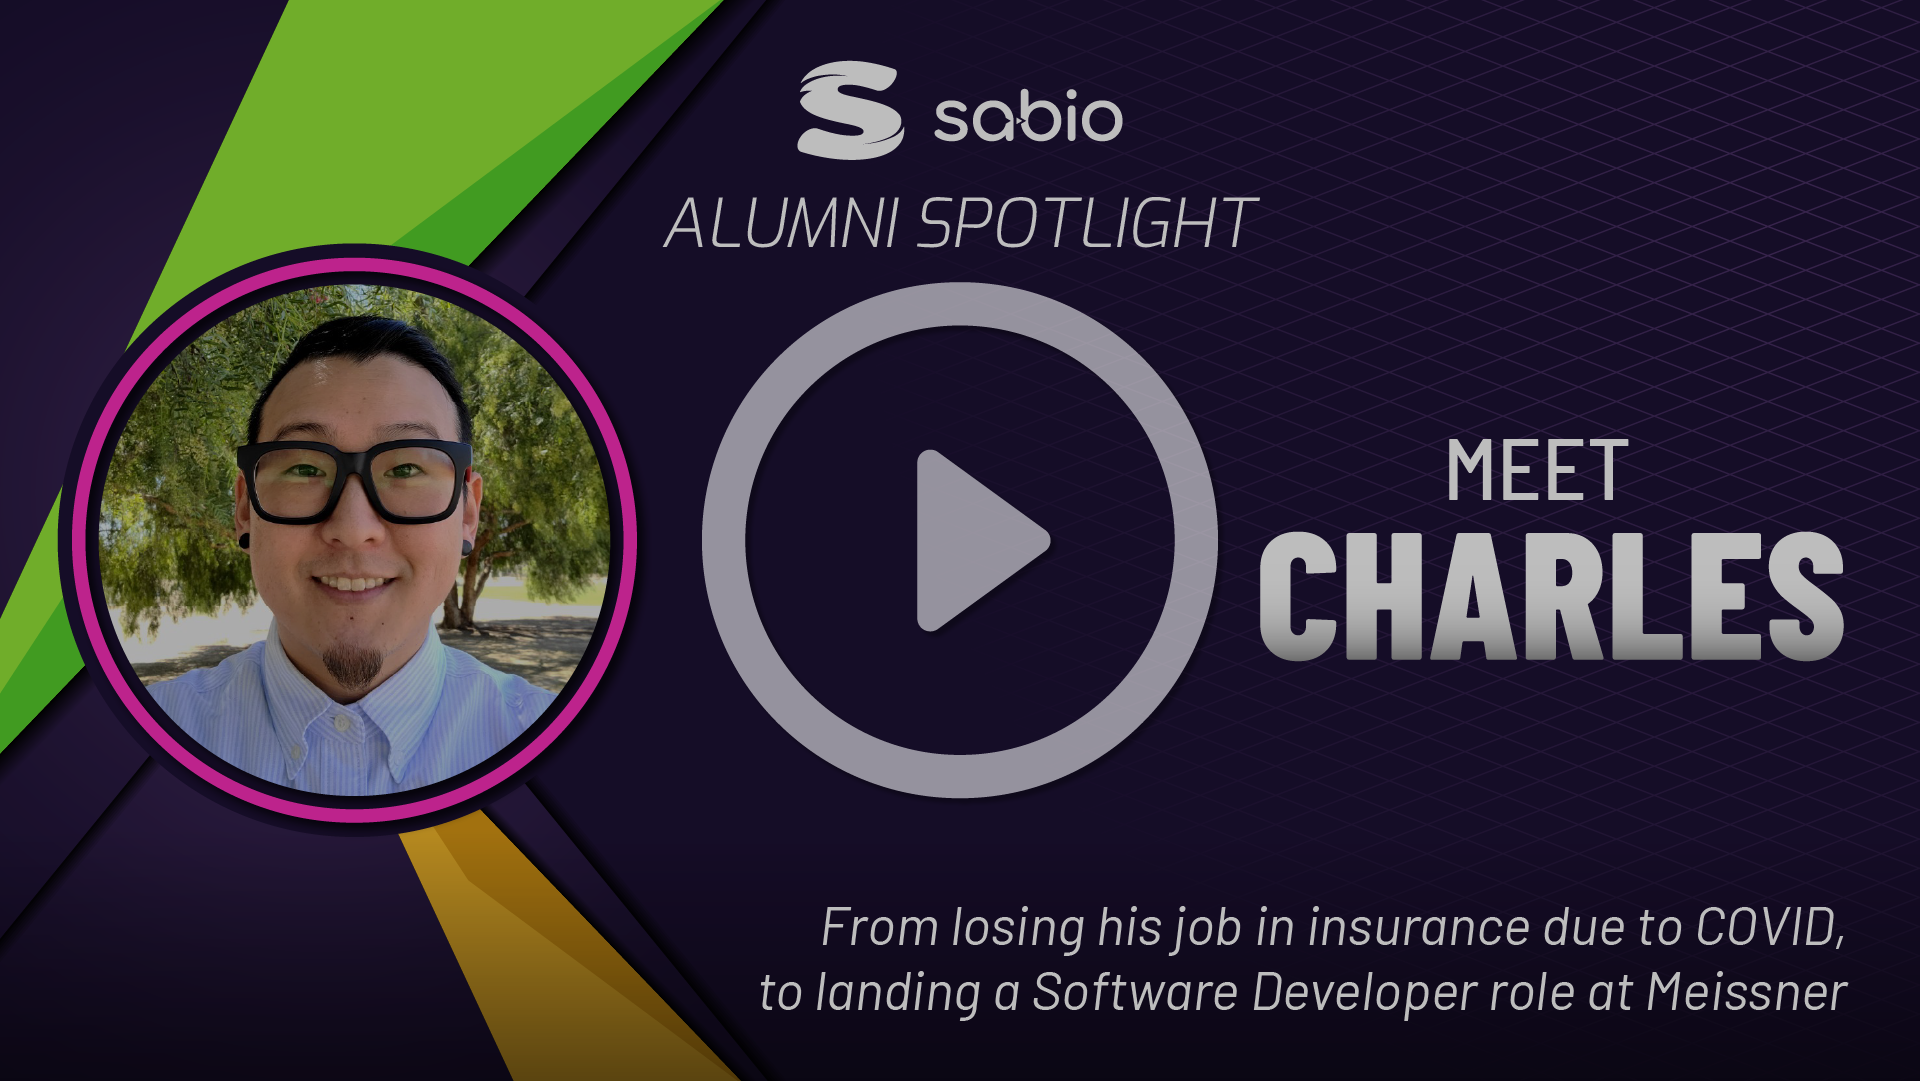 Sabio Alumni Spotlight: Charles. Play symbol overlaid to the image.